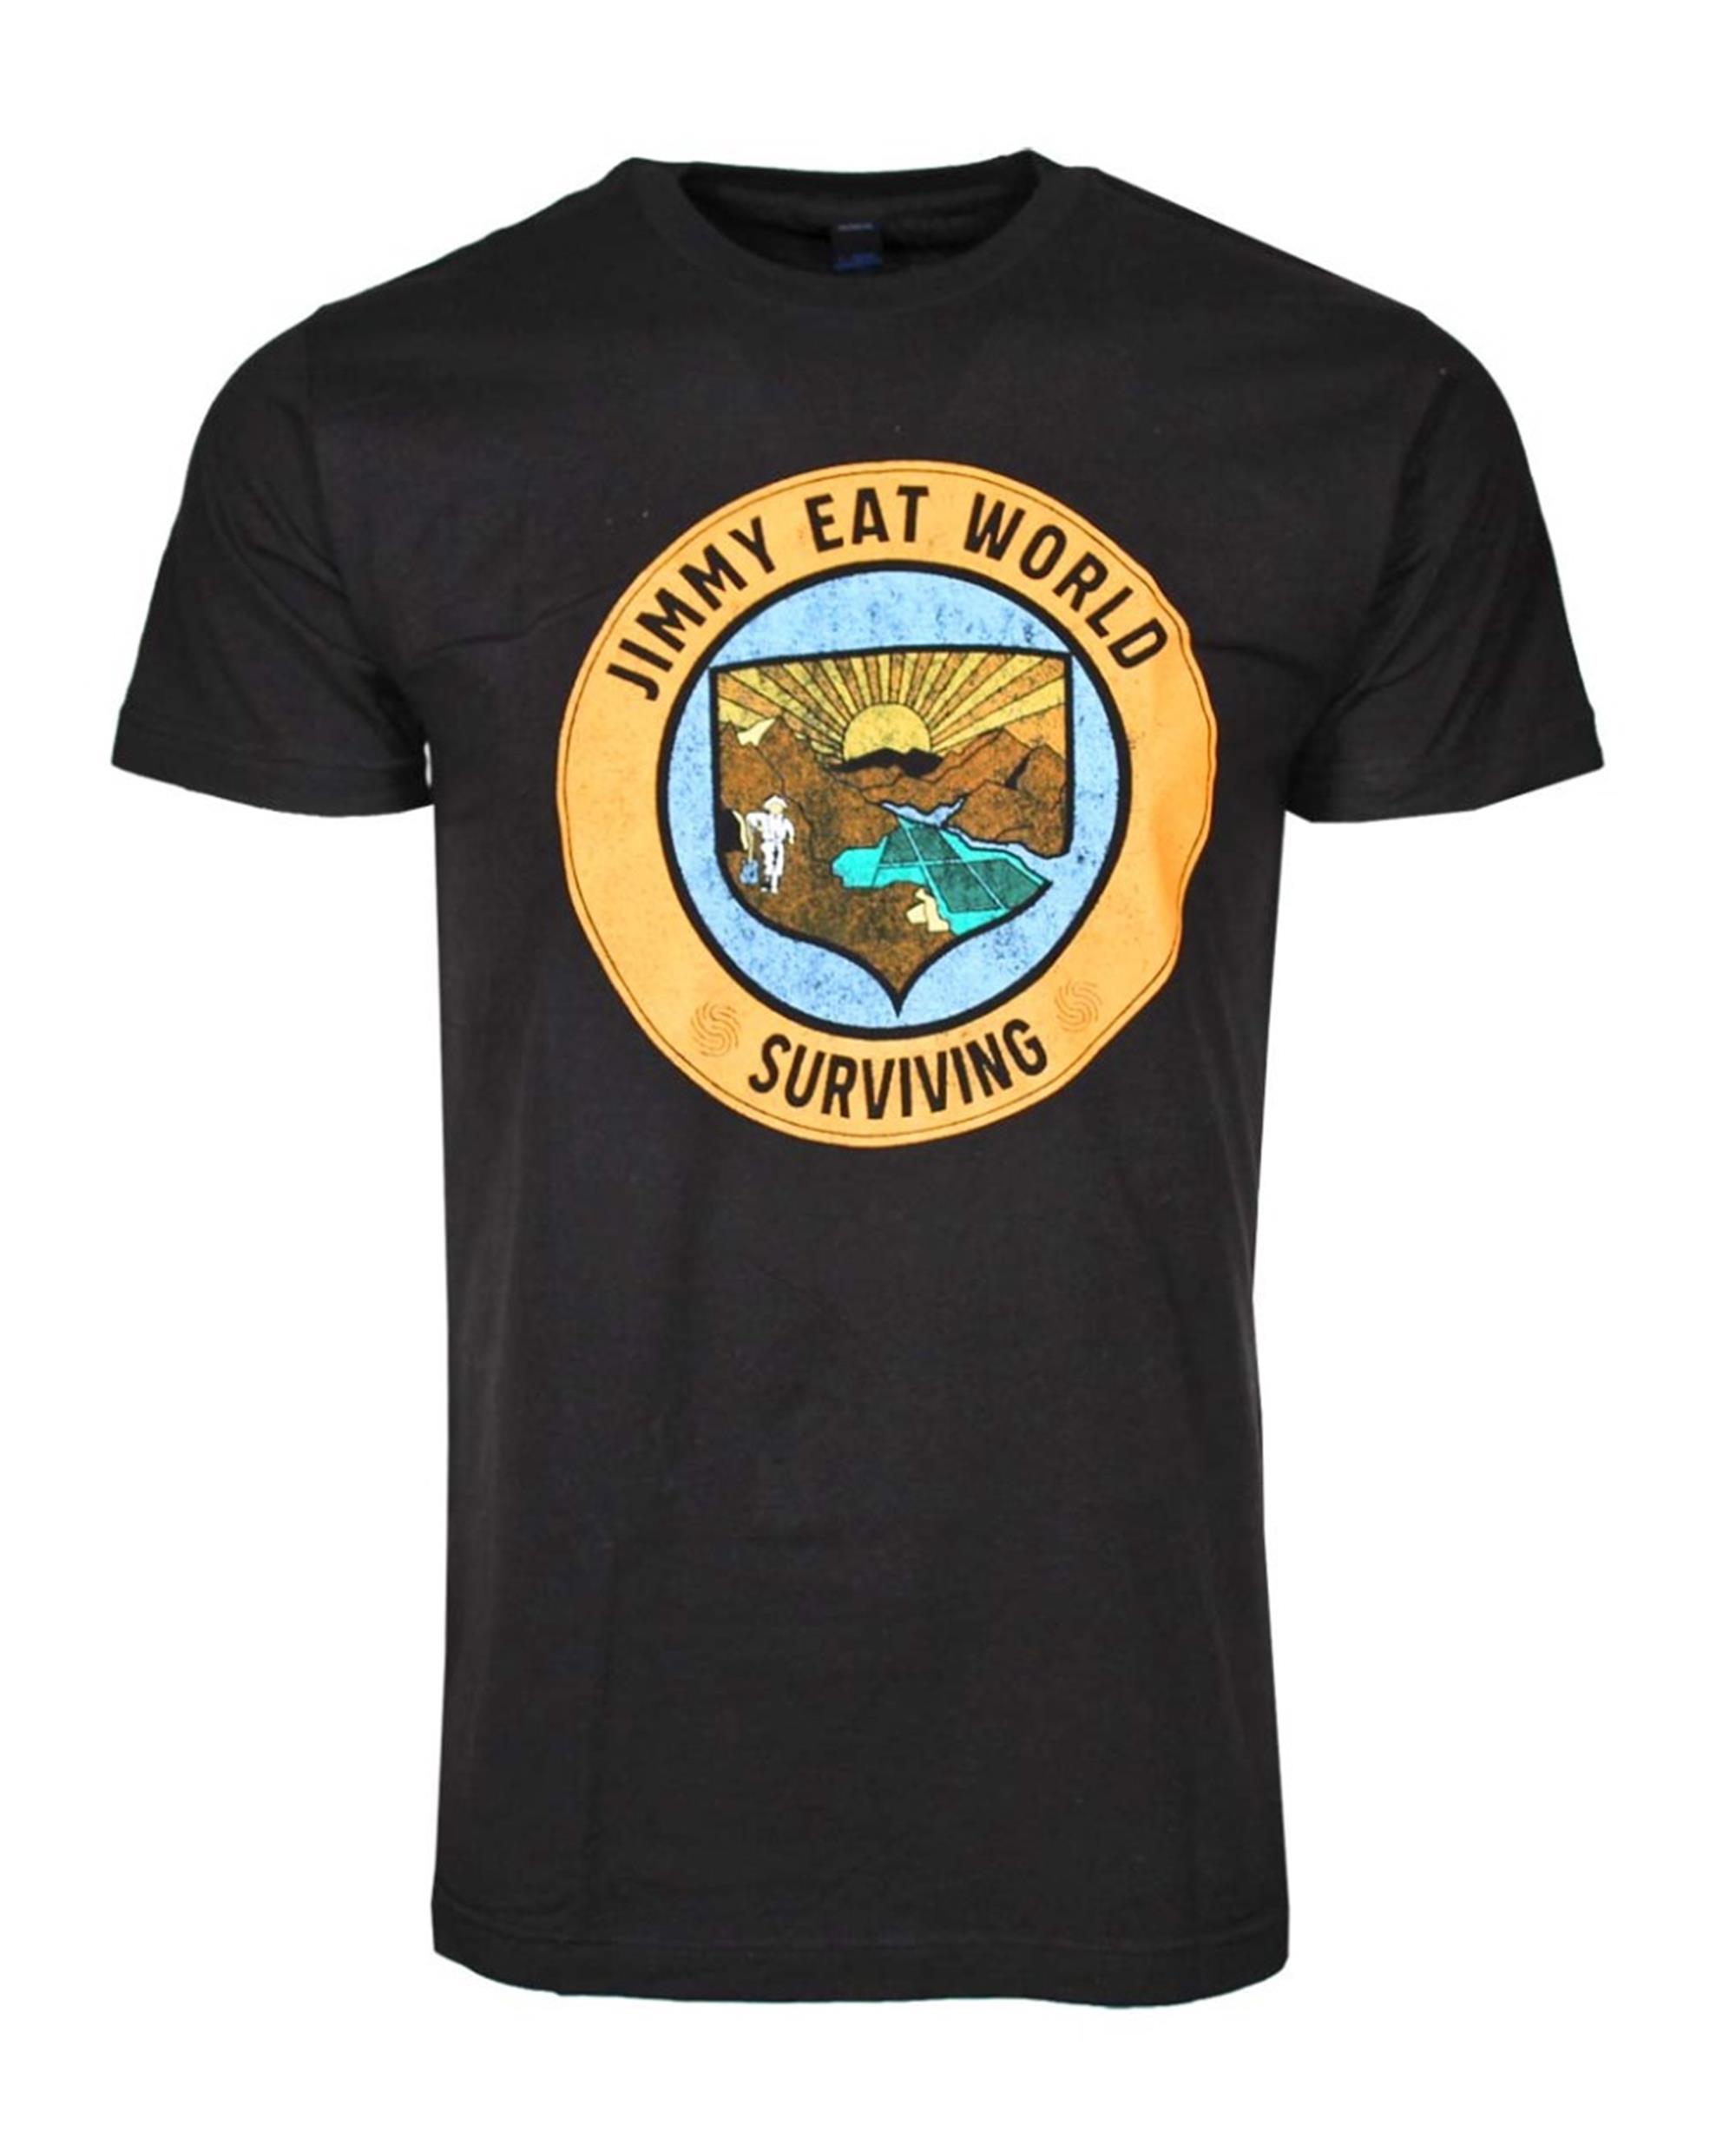 Jimmy Eat World Surviving Crest T-Shirt